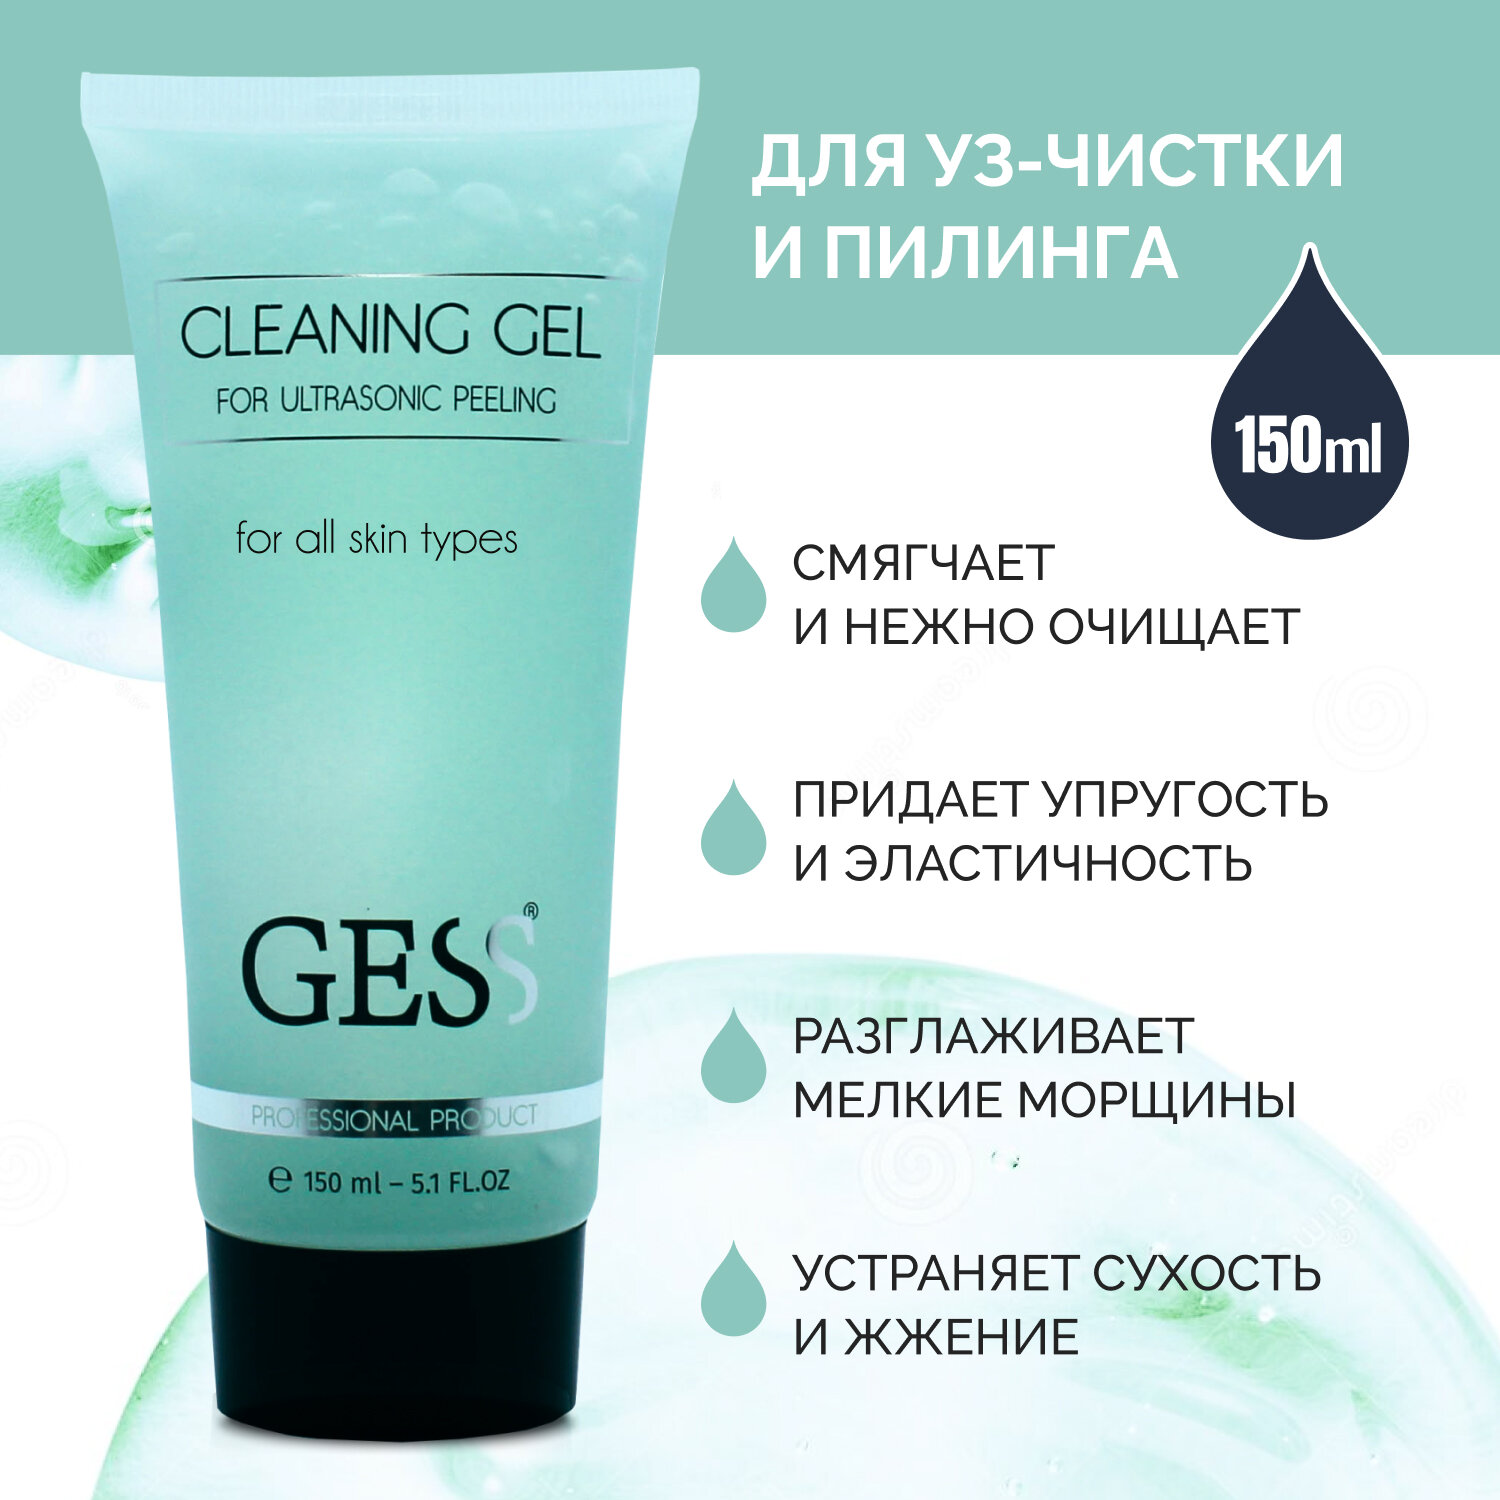 GESS Очищающий гель для всех типов кожи Cleaning Gel, 150 мл